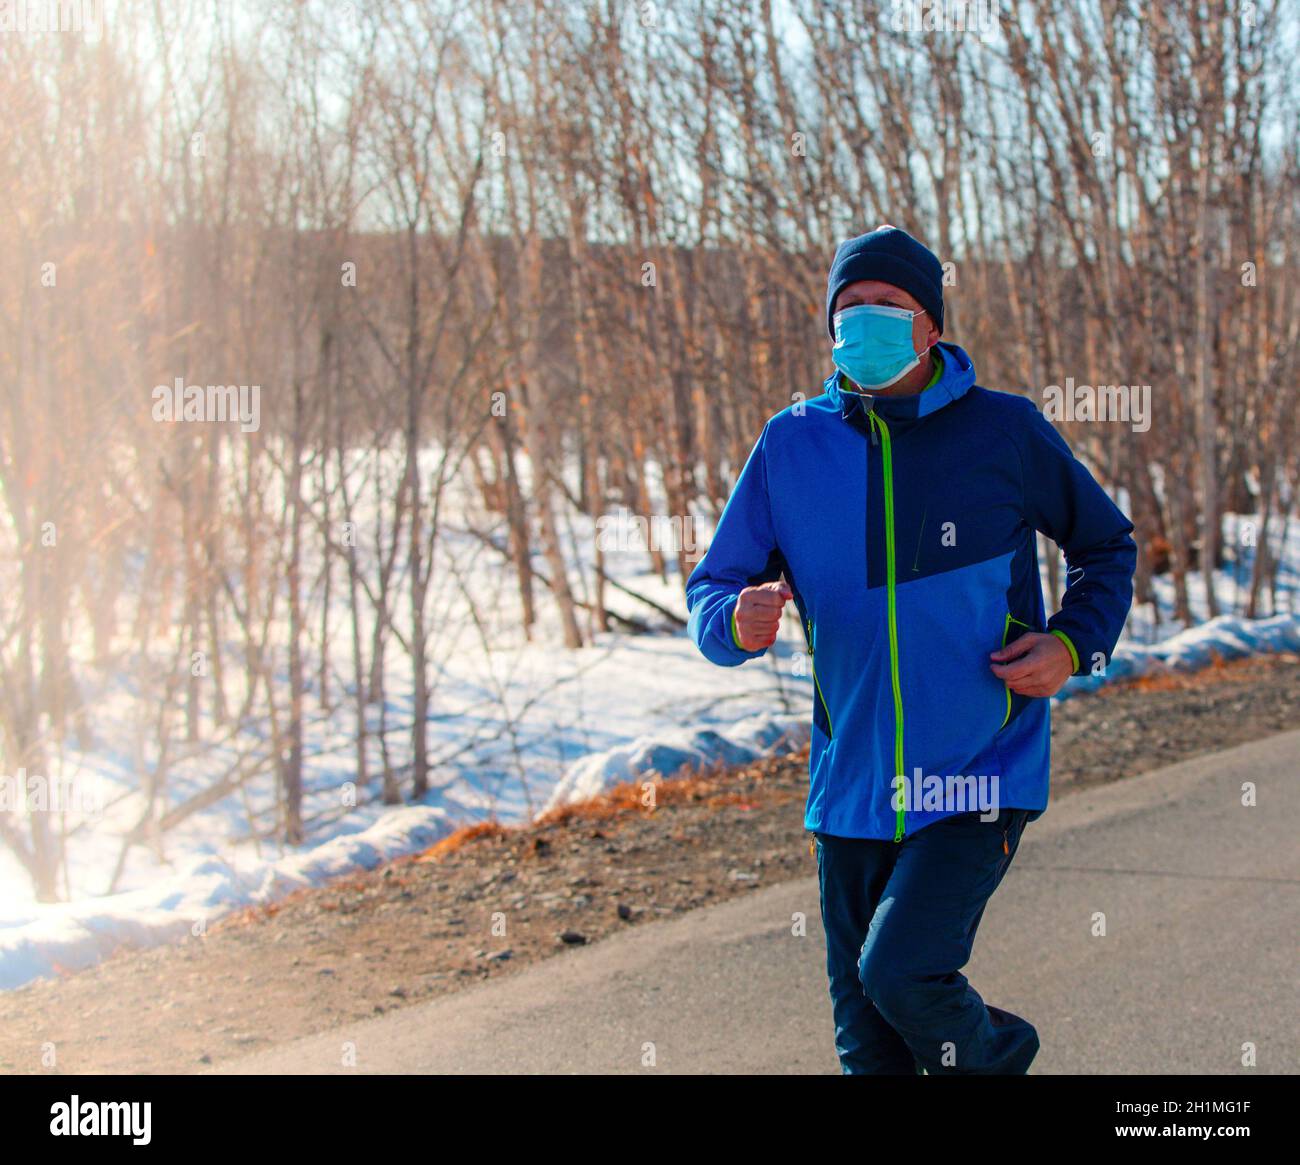 Runner wearing medical mask, Coronavirus pandemic Covid-19 in Europe. Sport, Active life Stock Photo